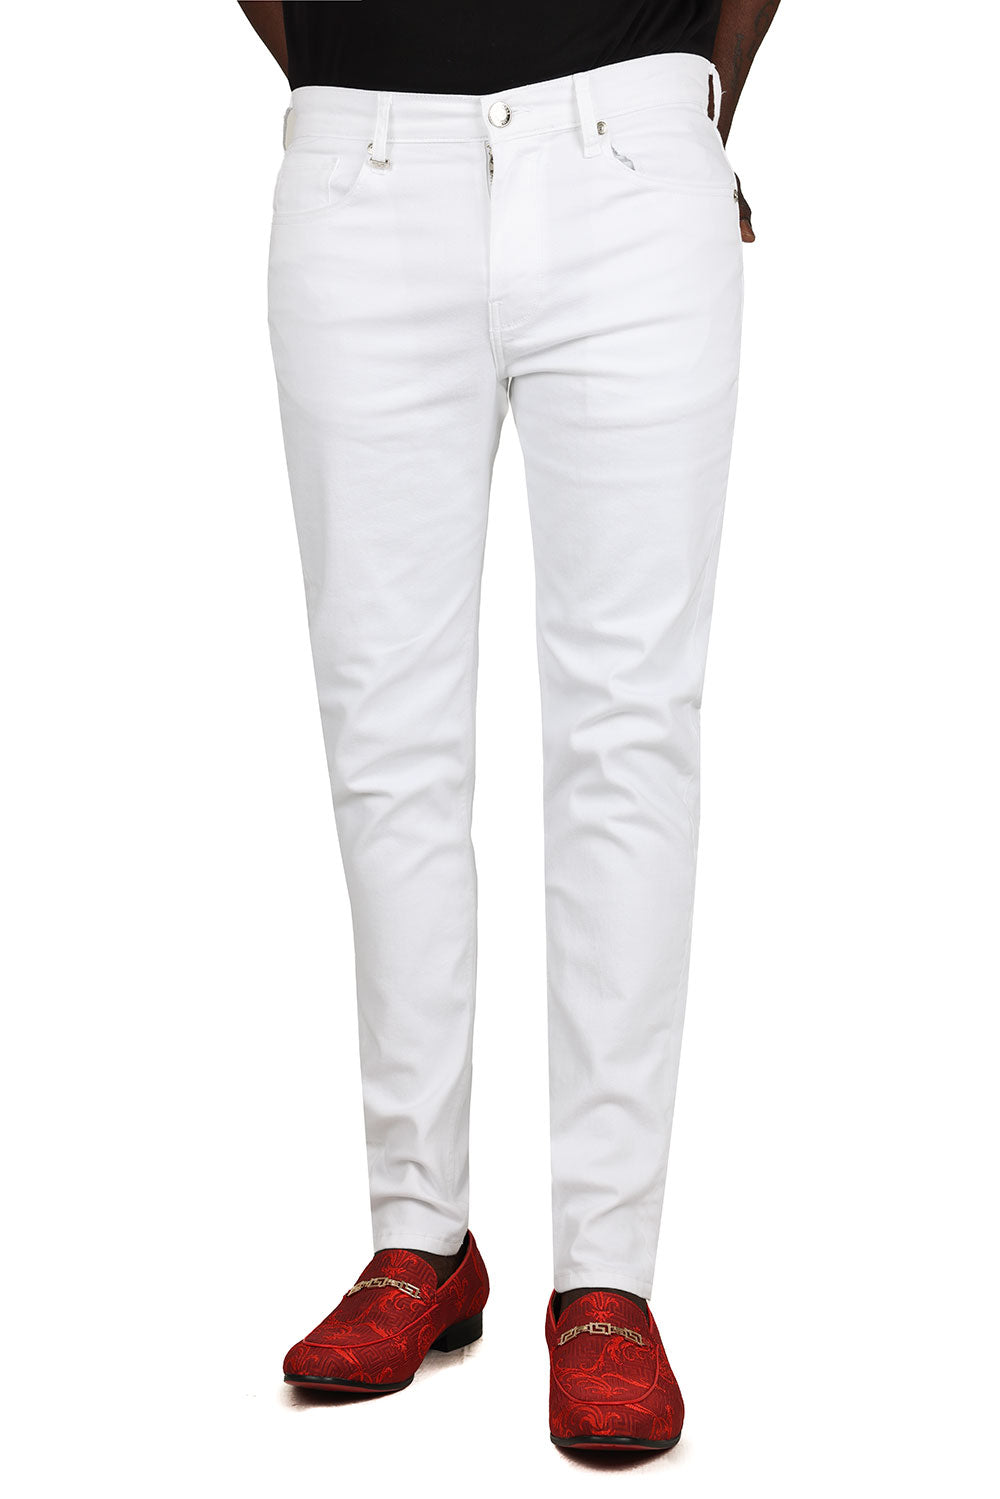 Barabas Men's Straight Fit Premium Solid White Denim Jeans 2JE10SL